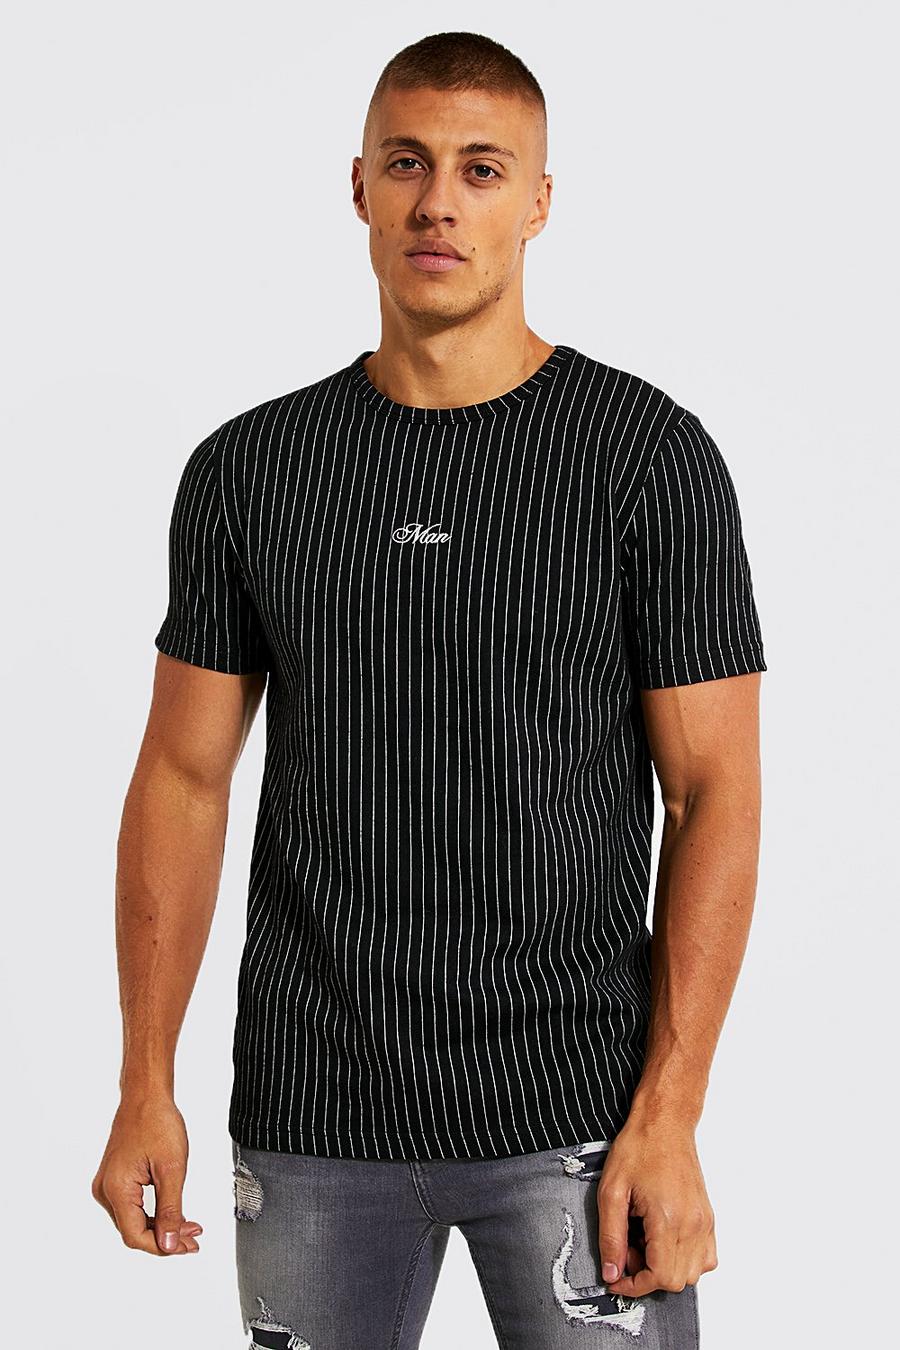 T-shirt Man Slim Fit in jacquard a righe verticali, Black image number 1